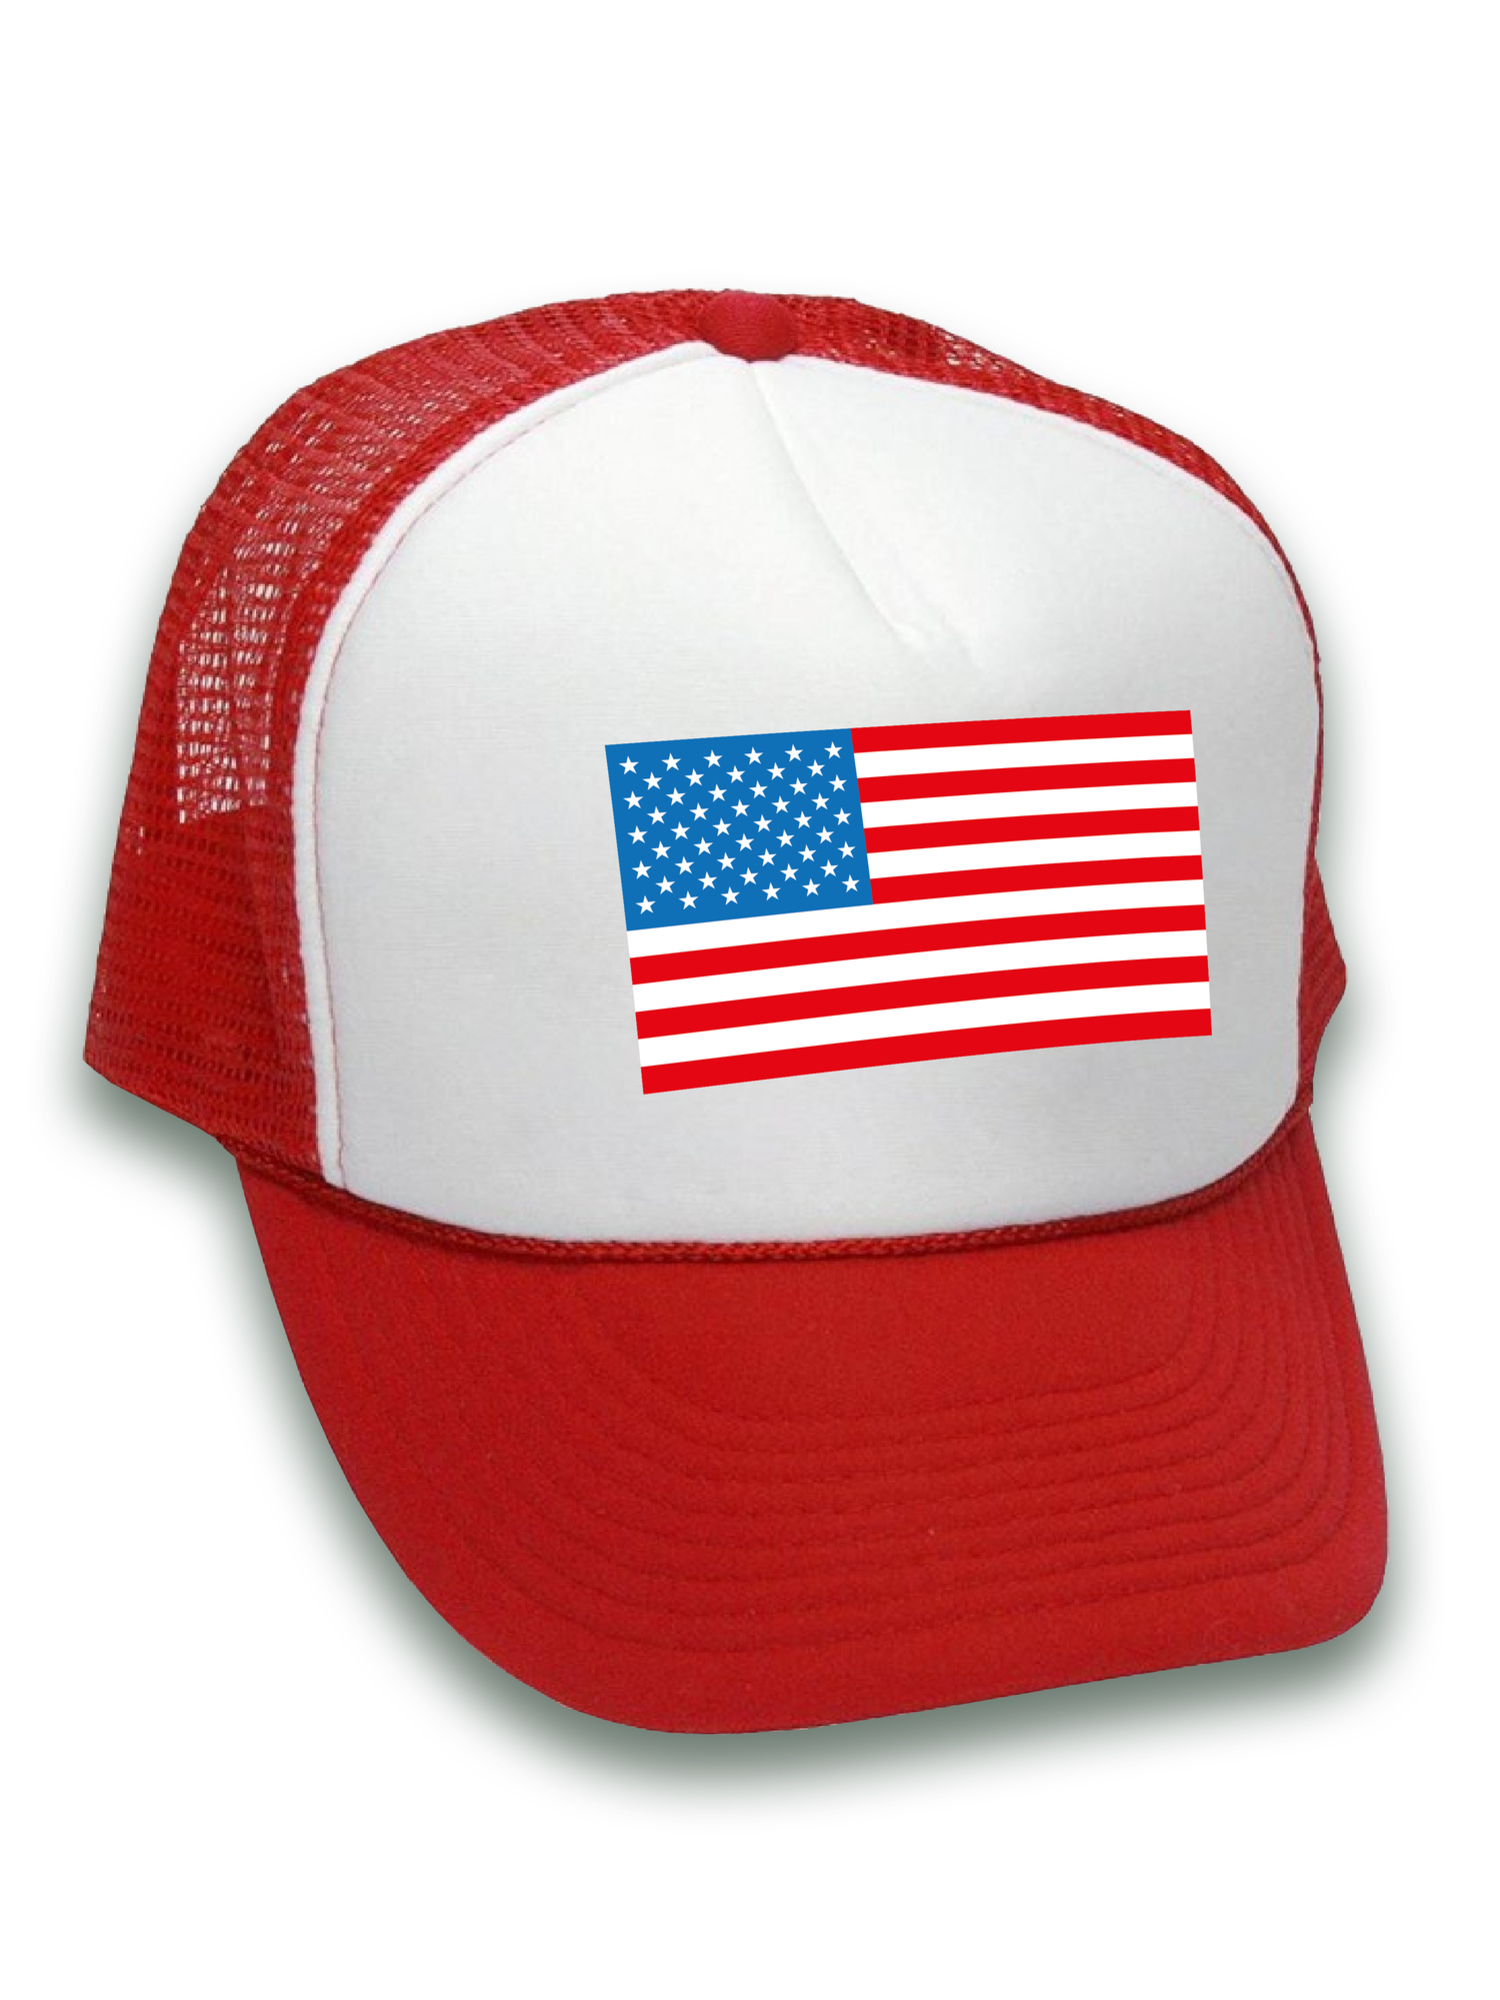 Awkward Styles USA Hat American Flag Hat USA Trucker Hat 4th of July Hats American Flag Hat USA Baseball Cap Patriotic Hat American Flag Men Women 4th of July Hat 4th of July Accessories - image 2 of 6